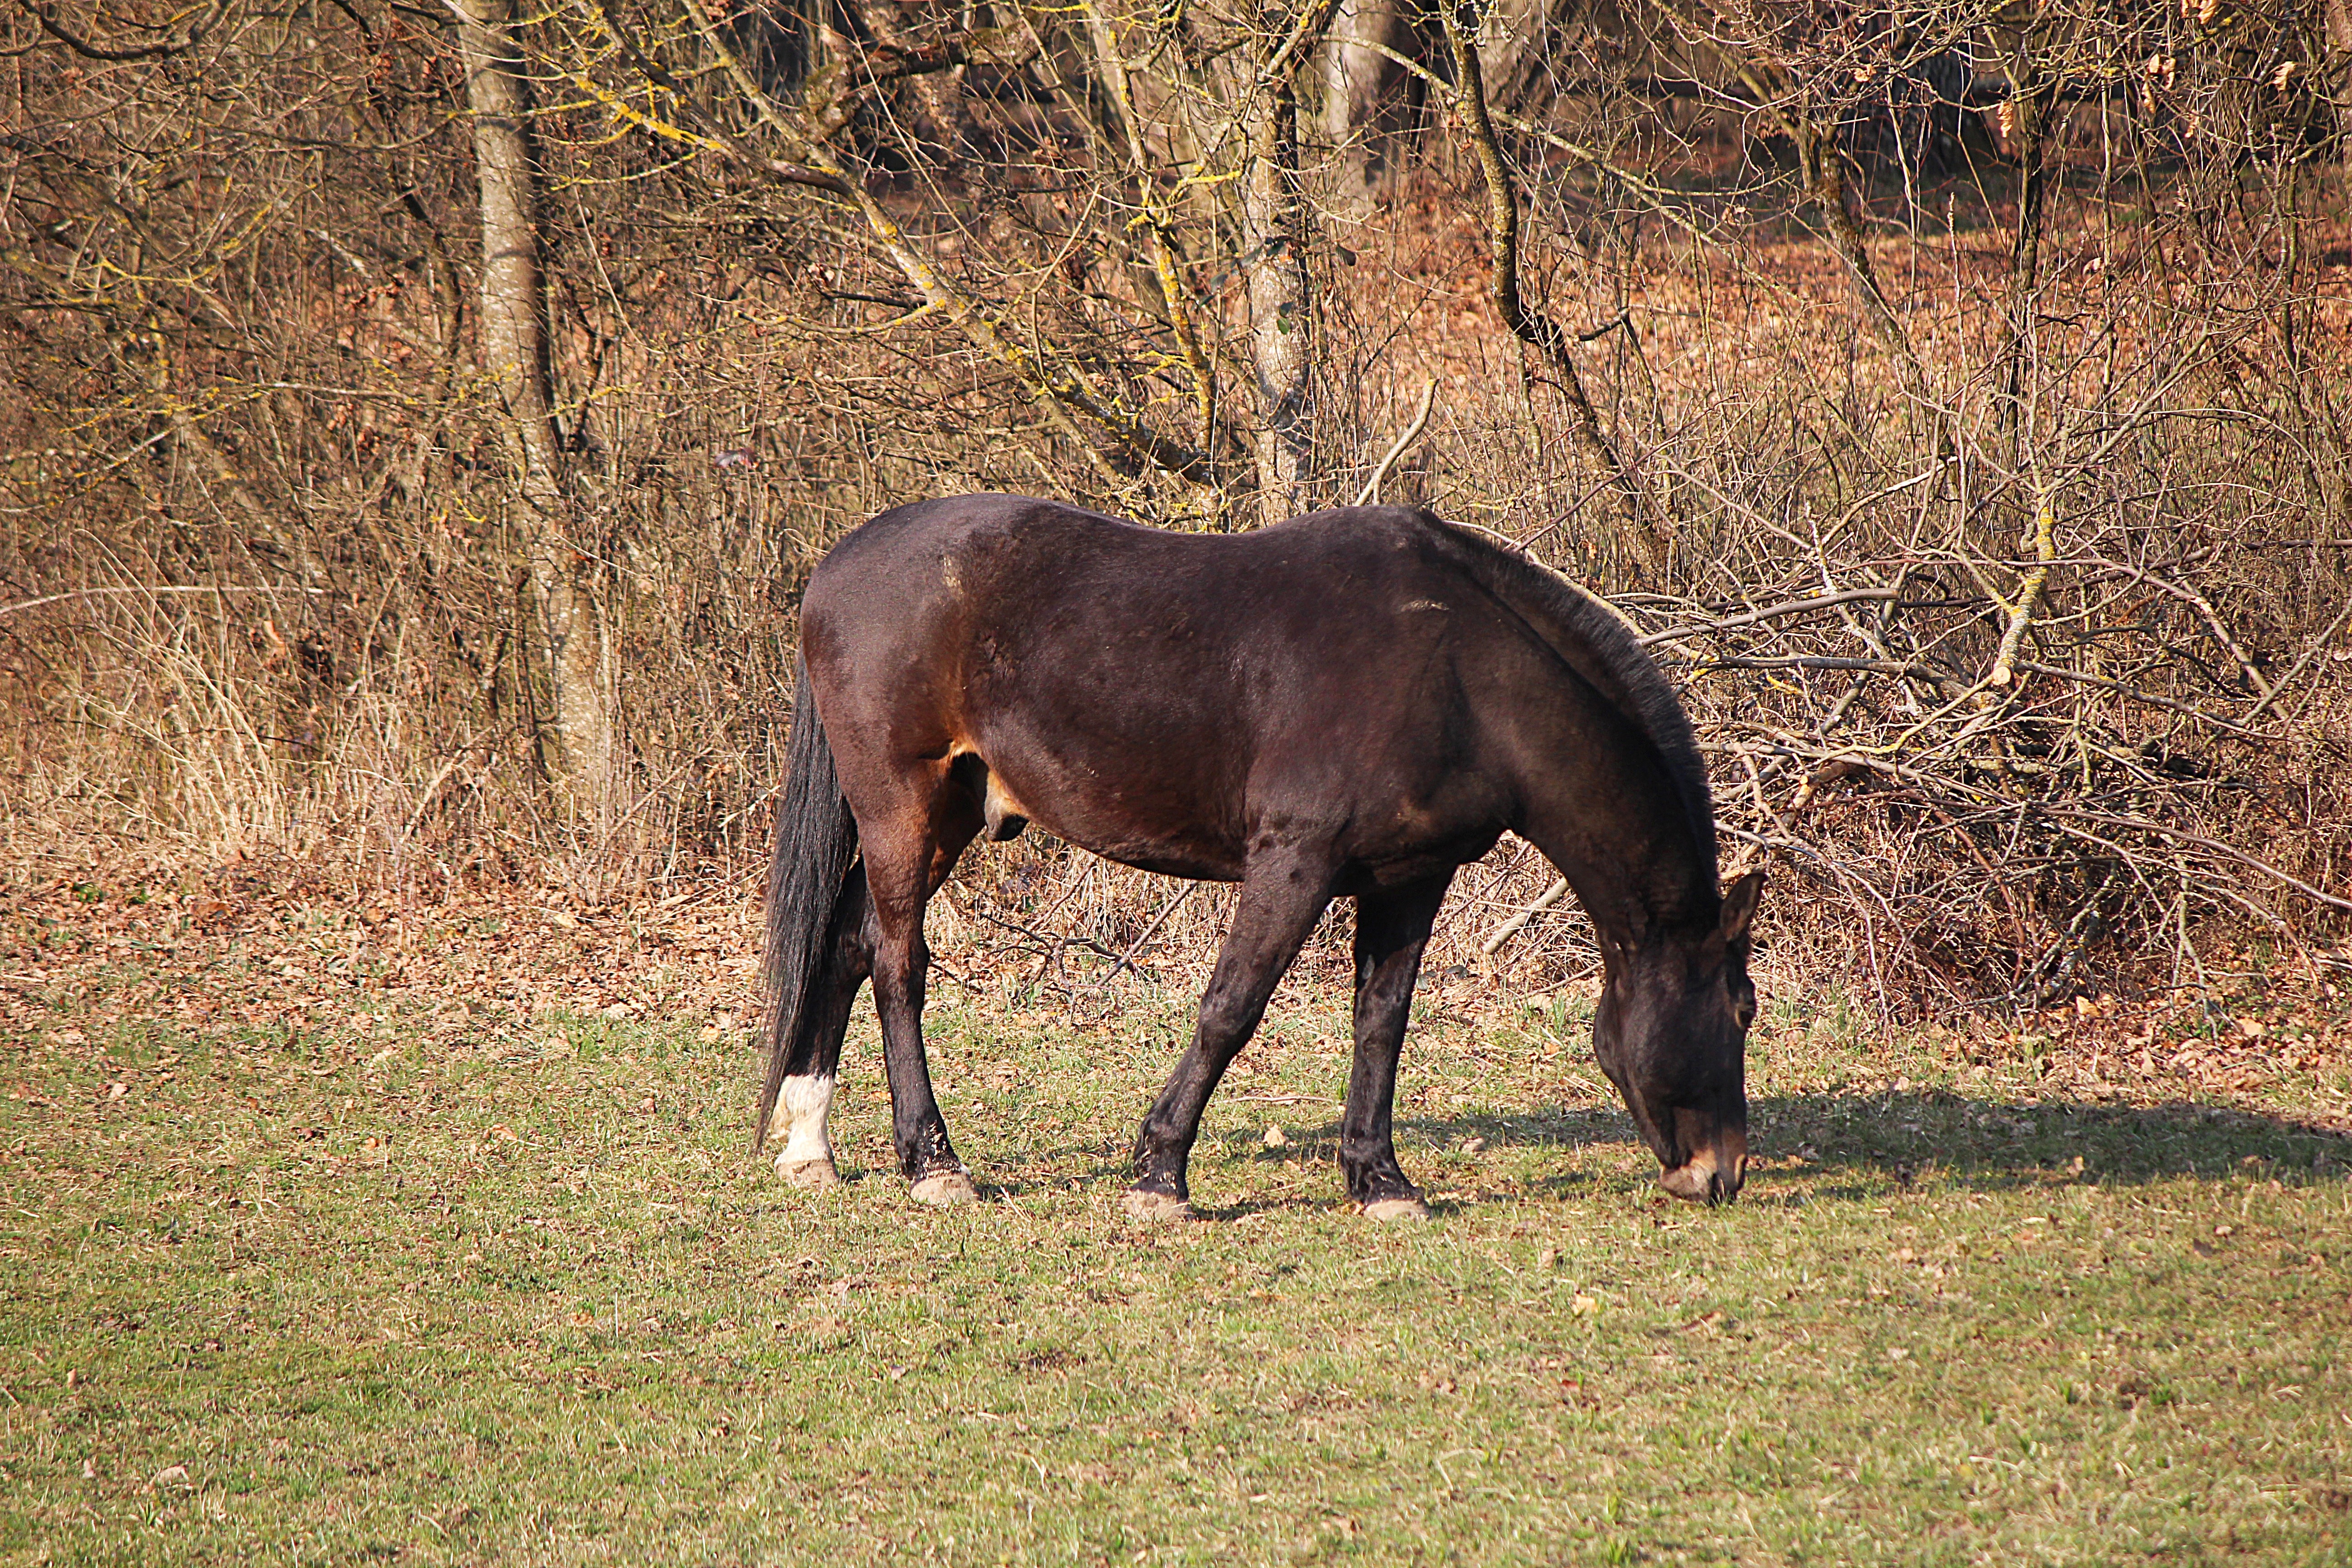 black horse eating on grass during daytime